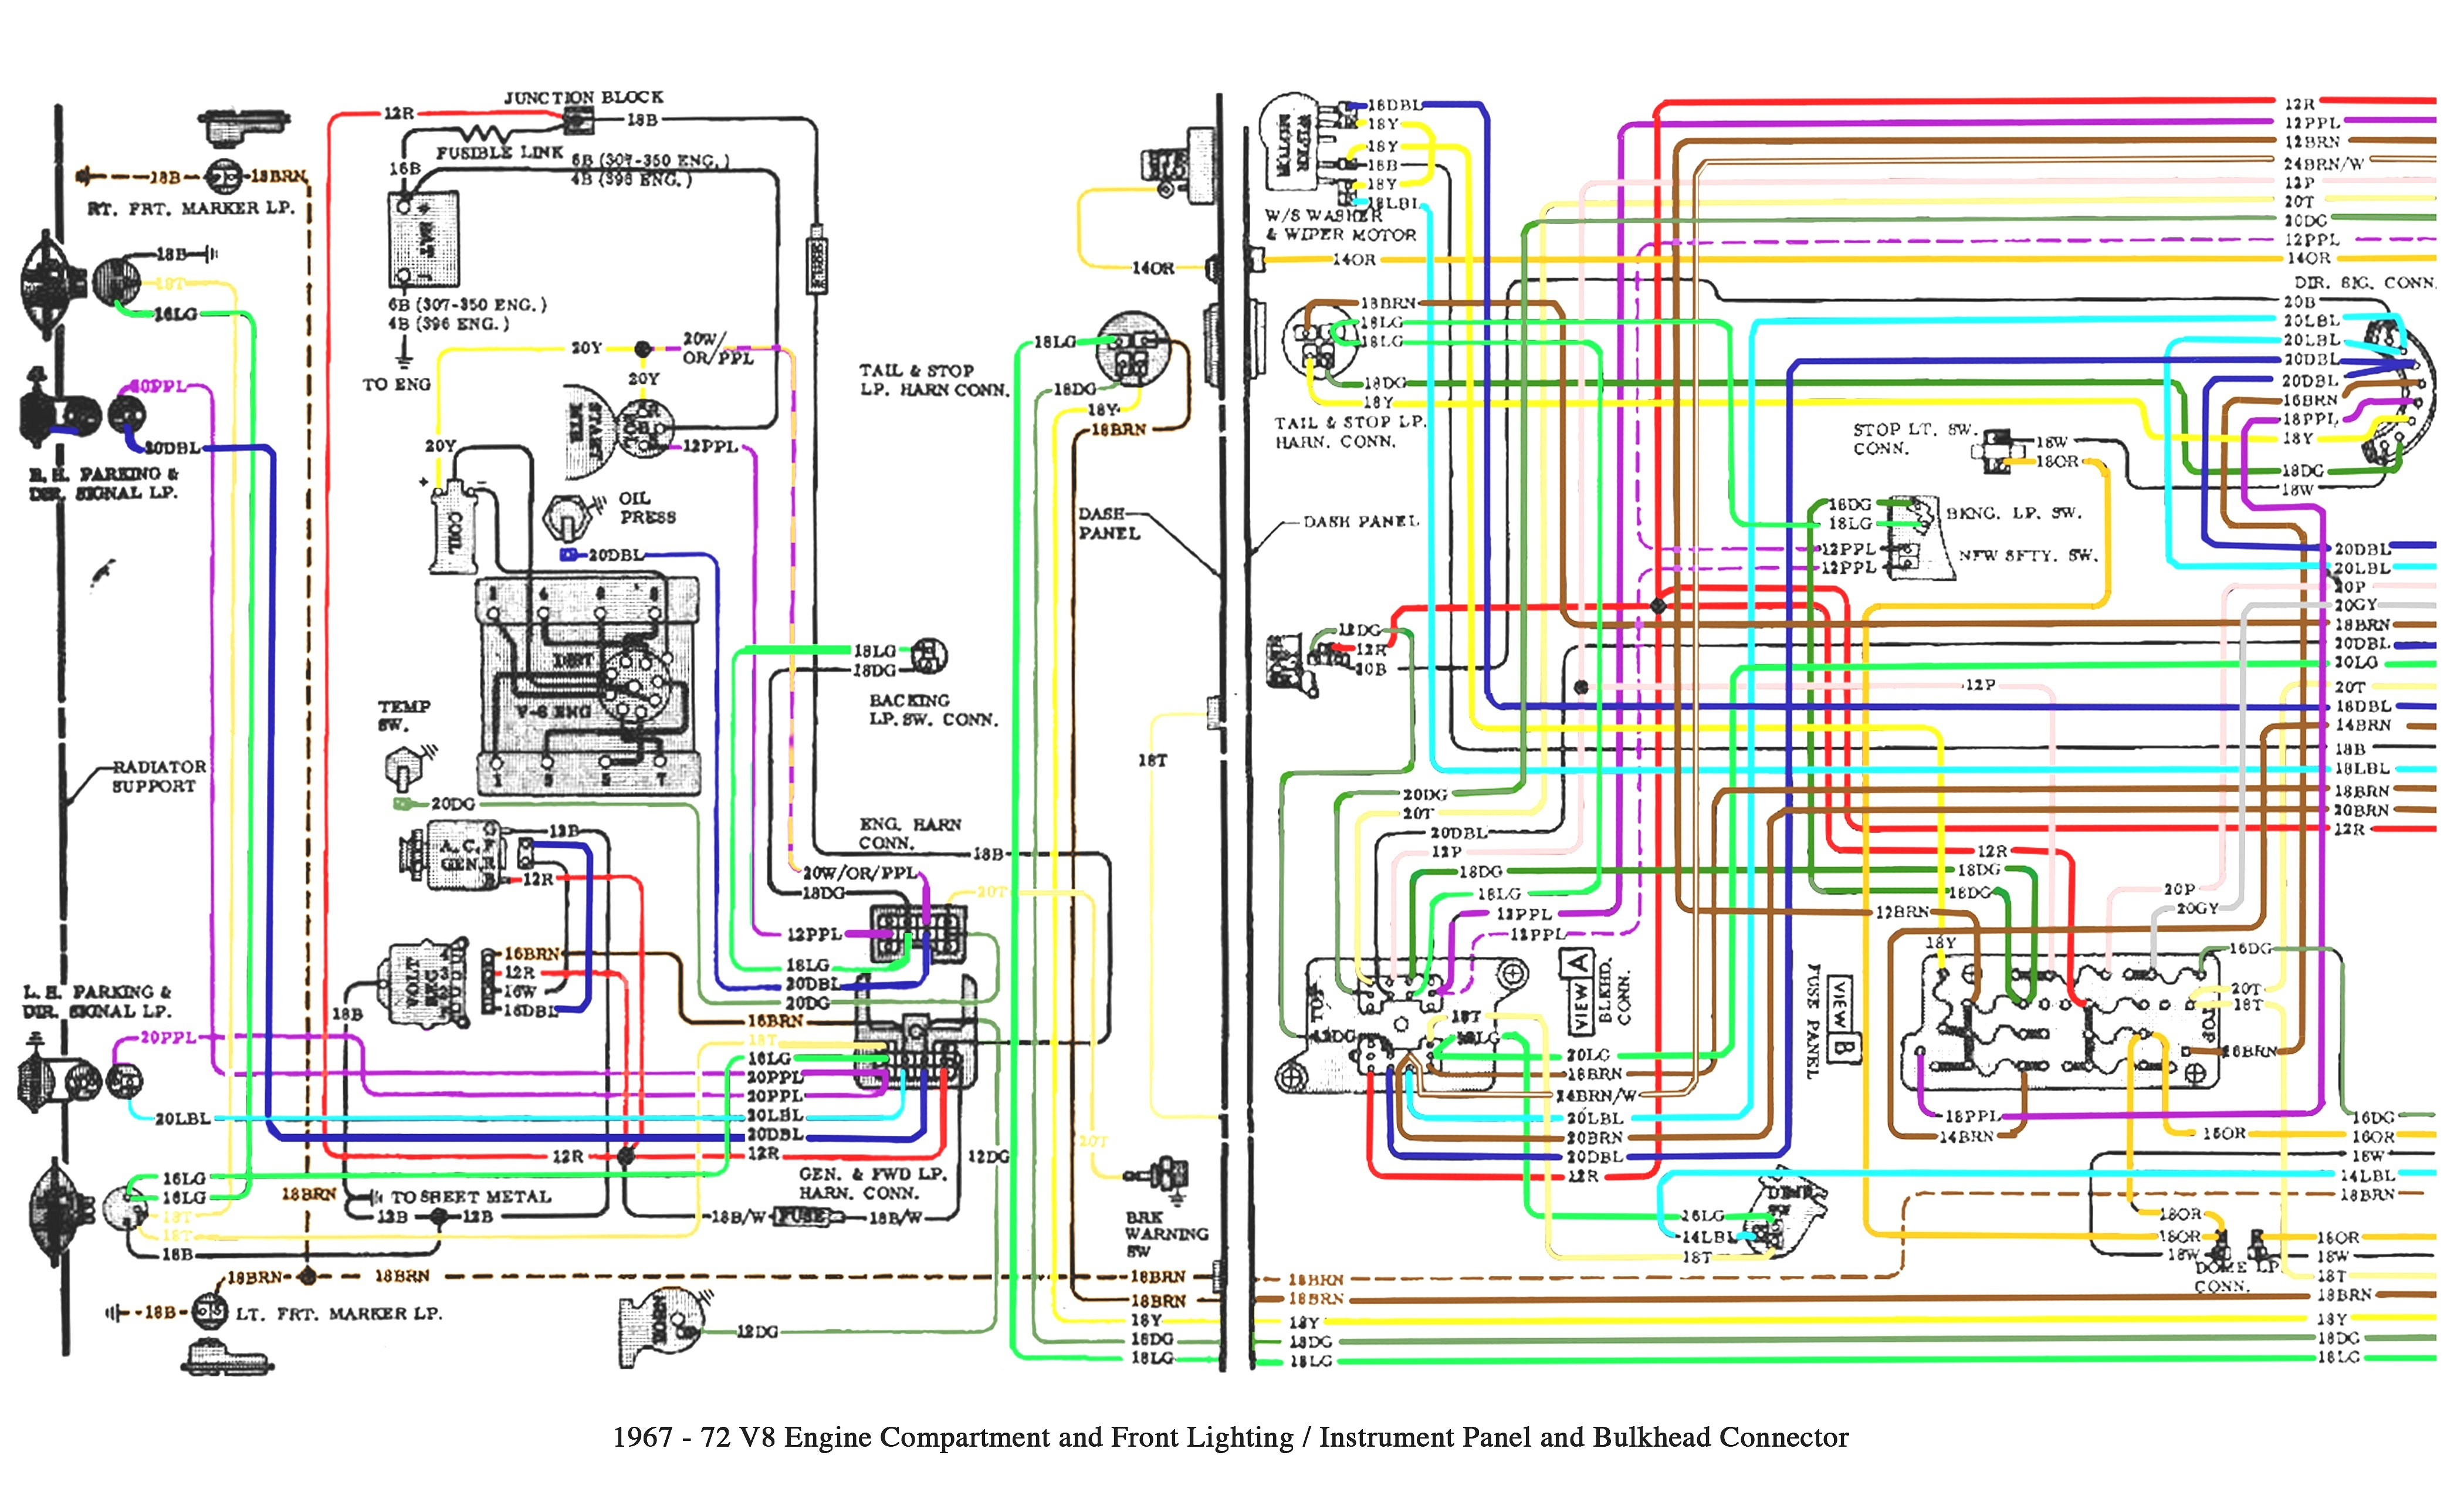 Ez 21 Wiring Diagram | Wiring Diagram - Ez Wiring 21 Circuit Harness Diagram